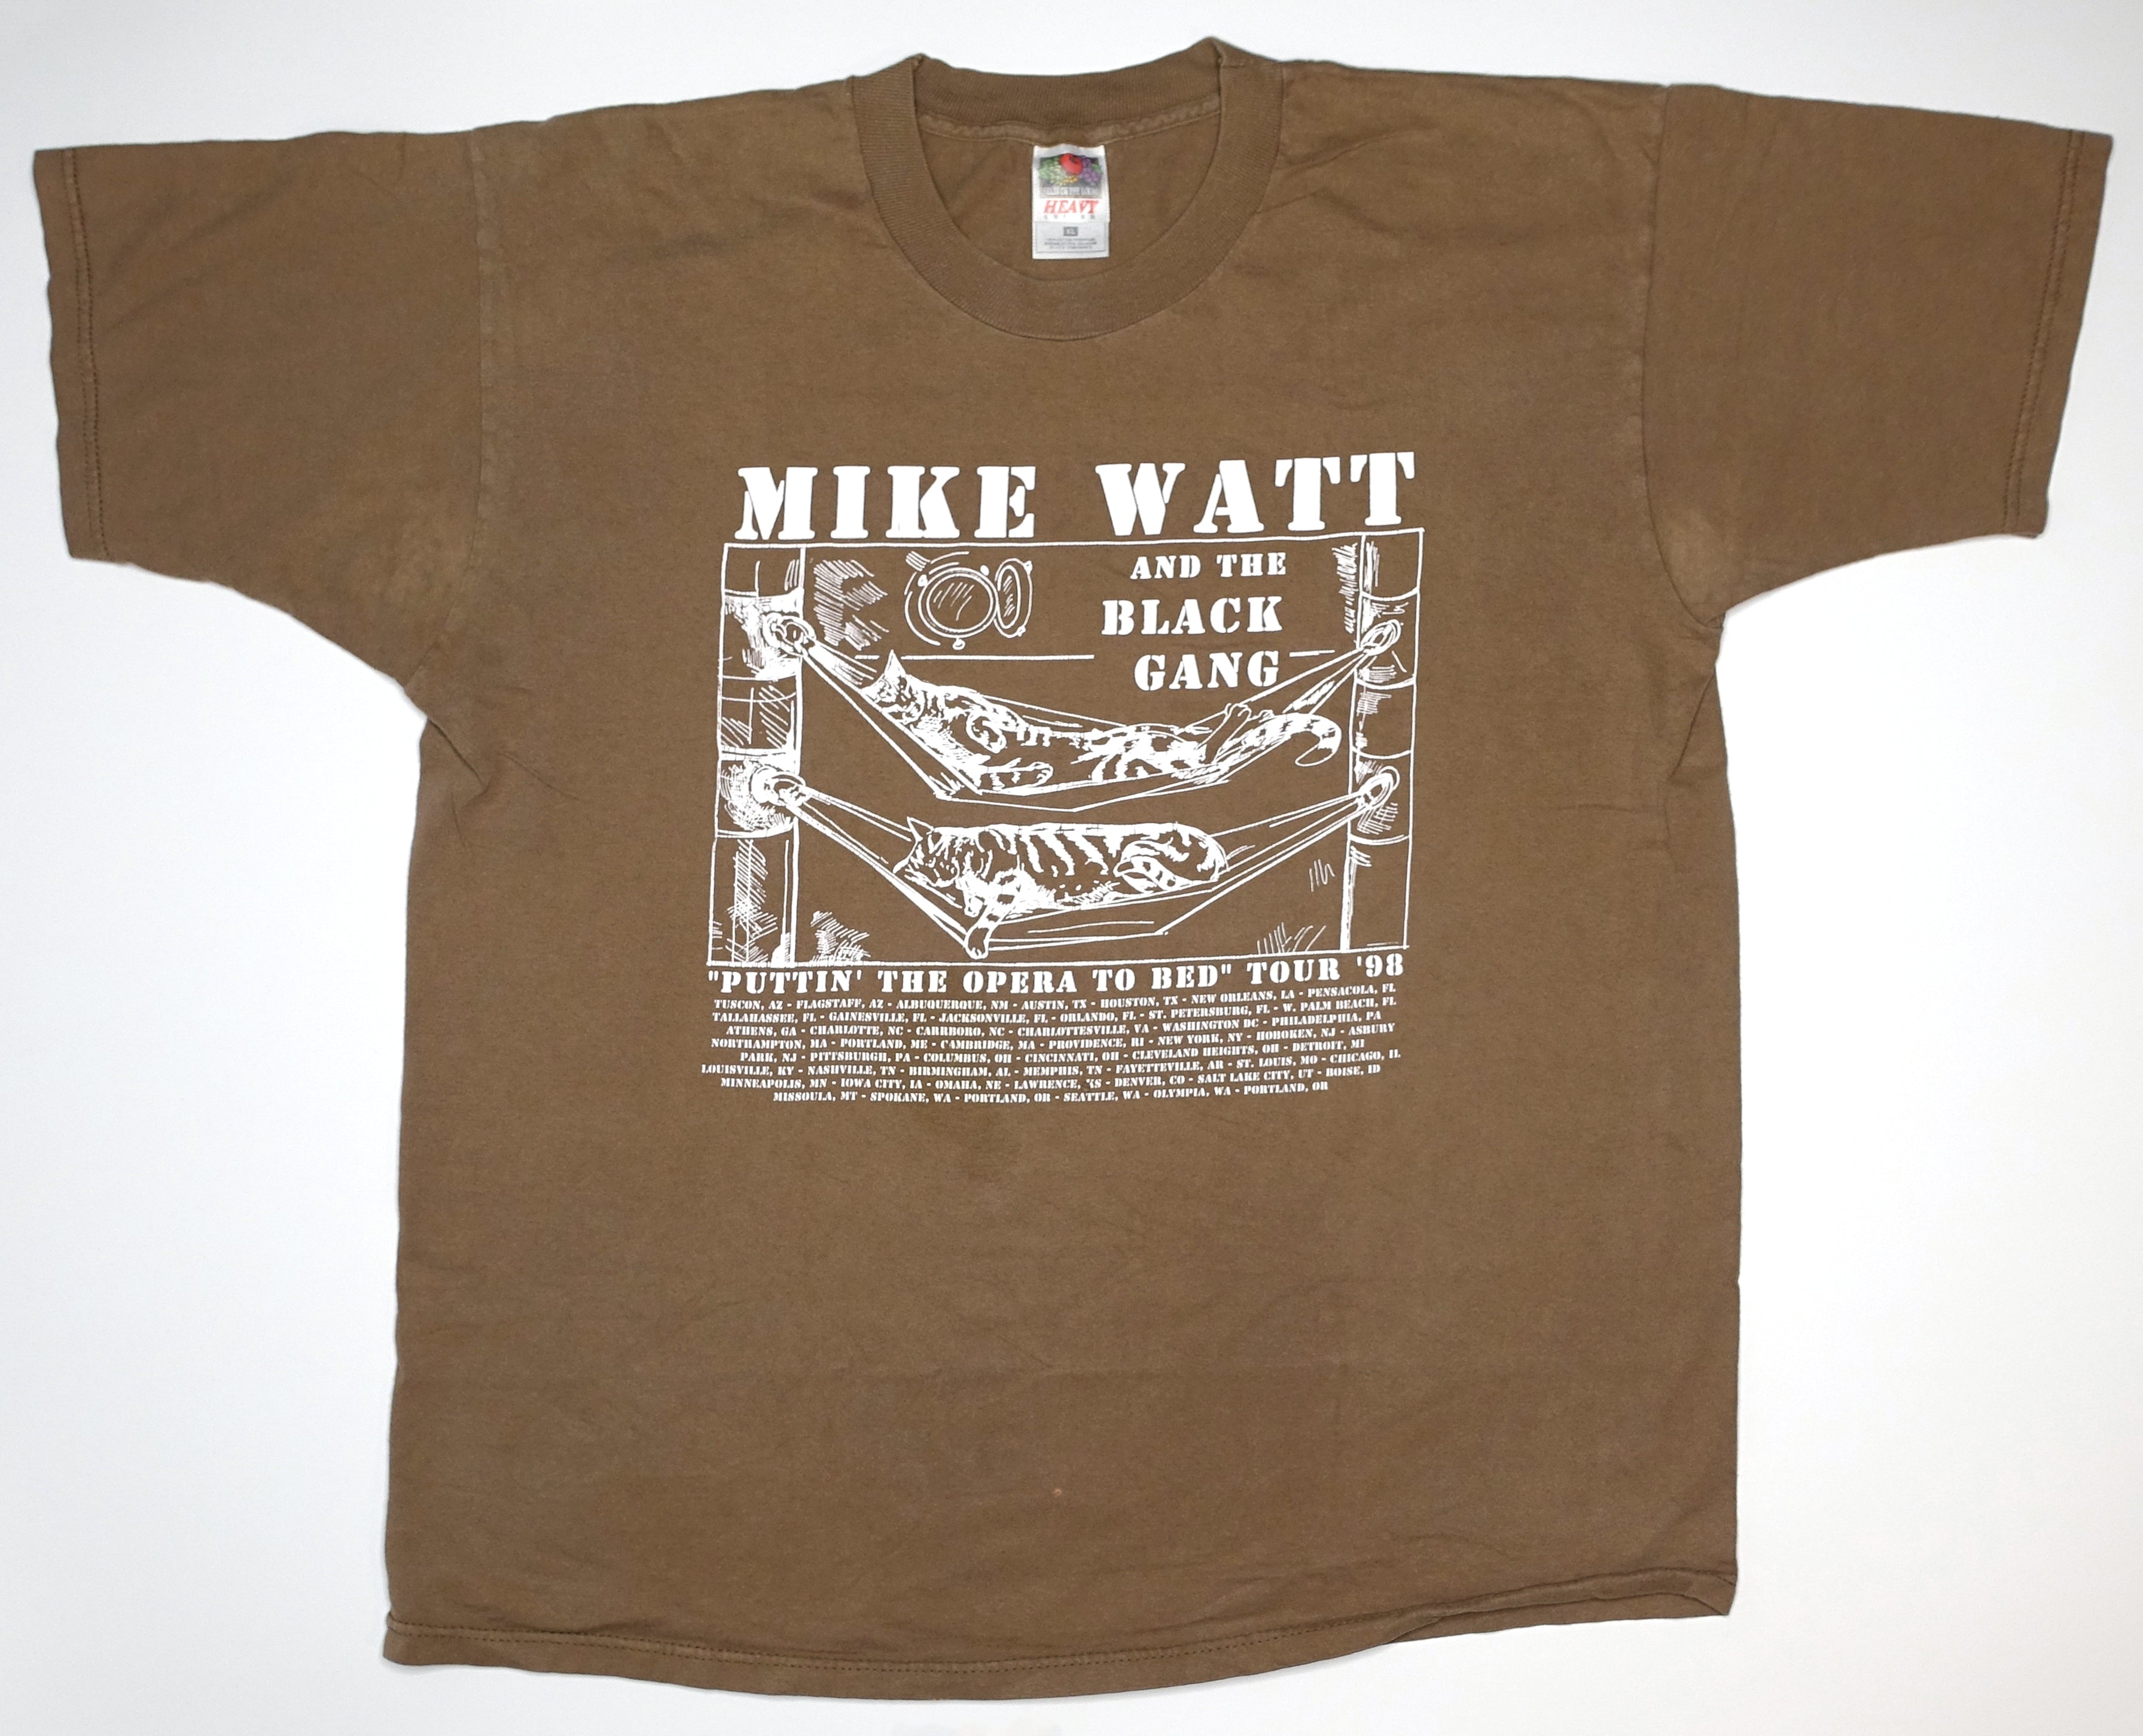 Mike Watt - Puttin' The Opera To Bed 1998 Tour Shirt Size XL